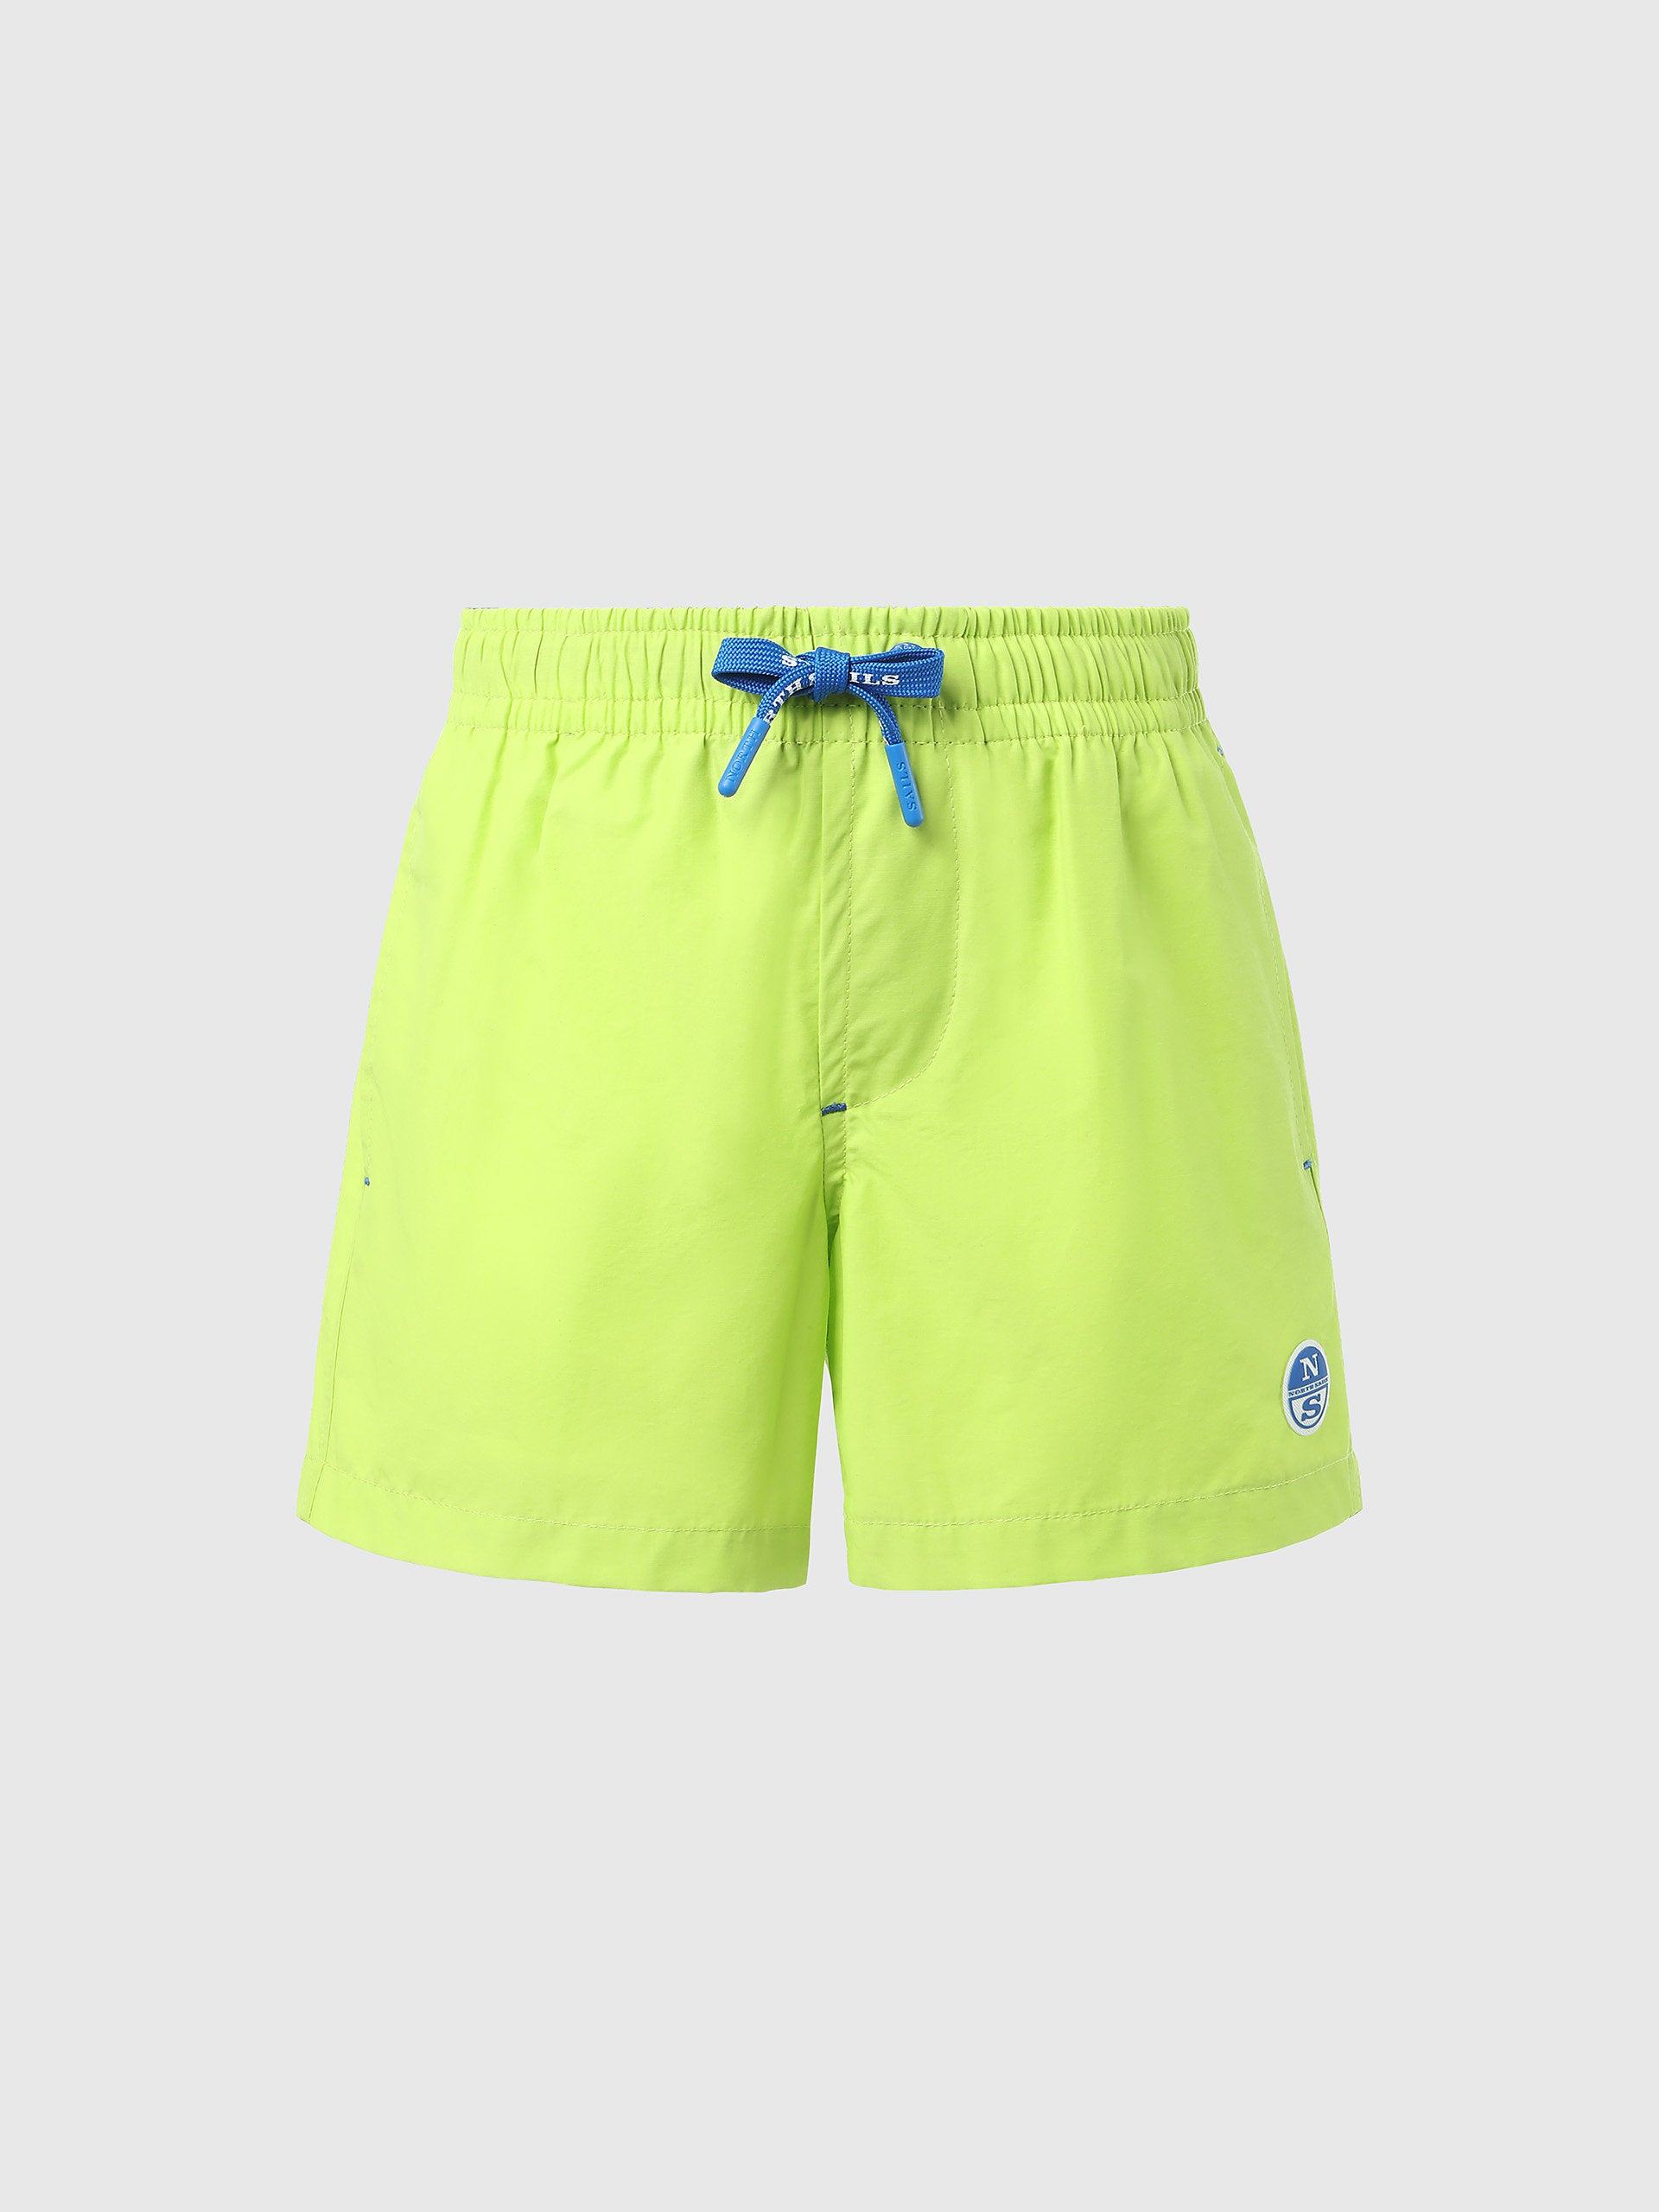 North Sails - Swim shorts with logo patchNorth SailsLime4